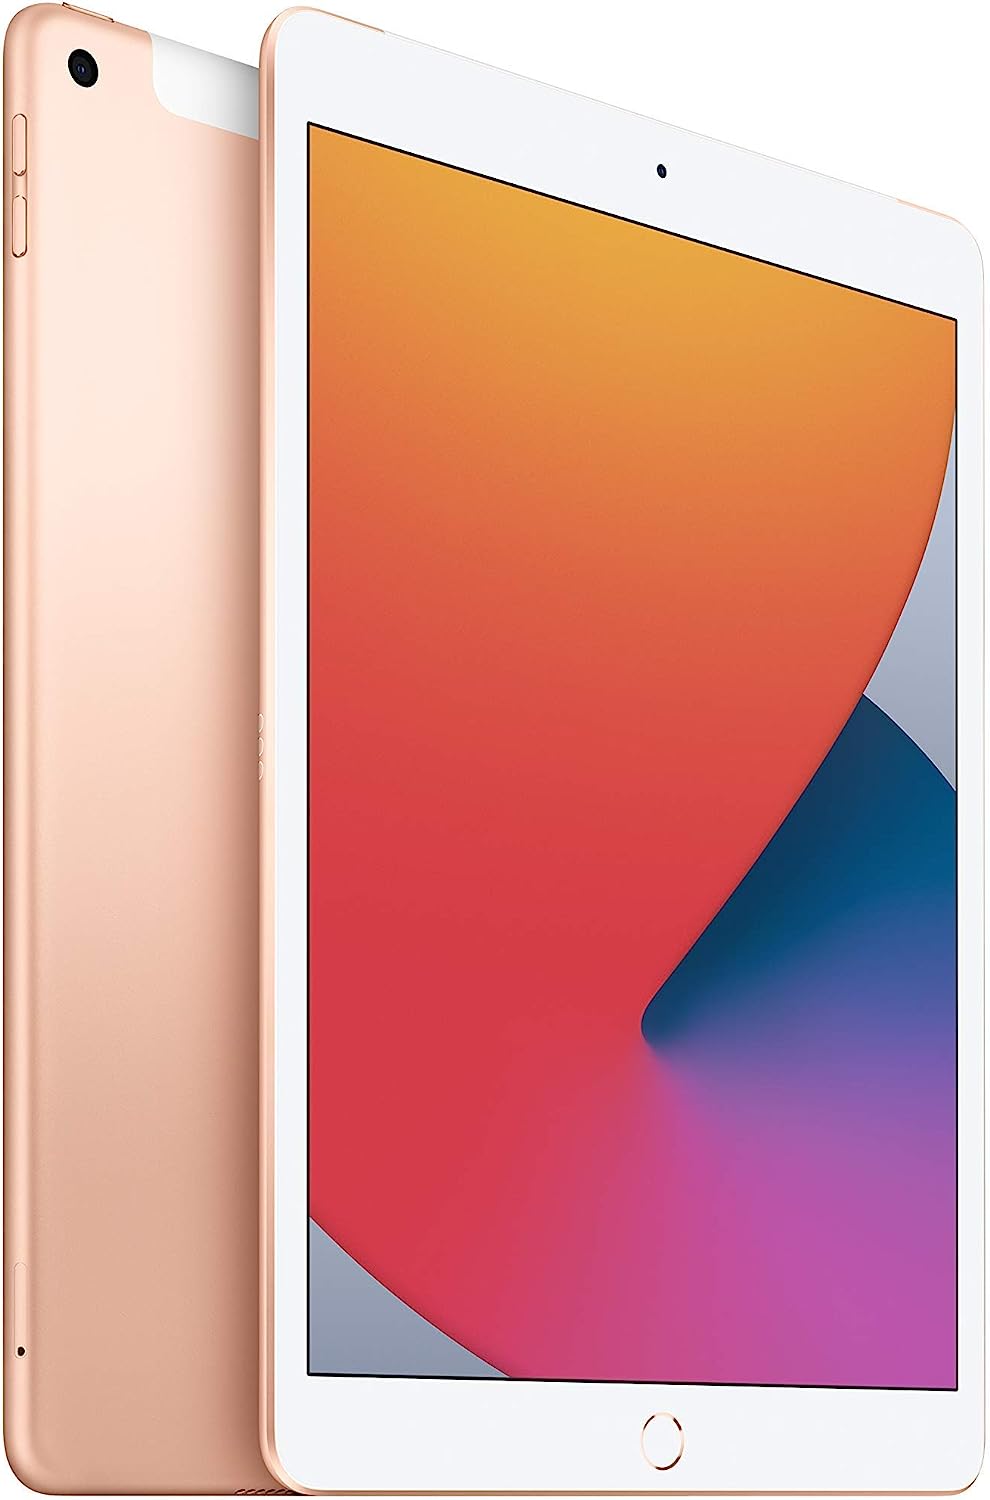 Apple iPad 8th Gen 10.2-inch, 32GB, WIFI + 4G Unlocked All Carriers - Gold (Certified Refurbished)